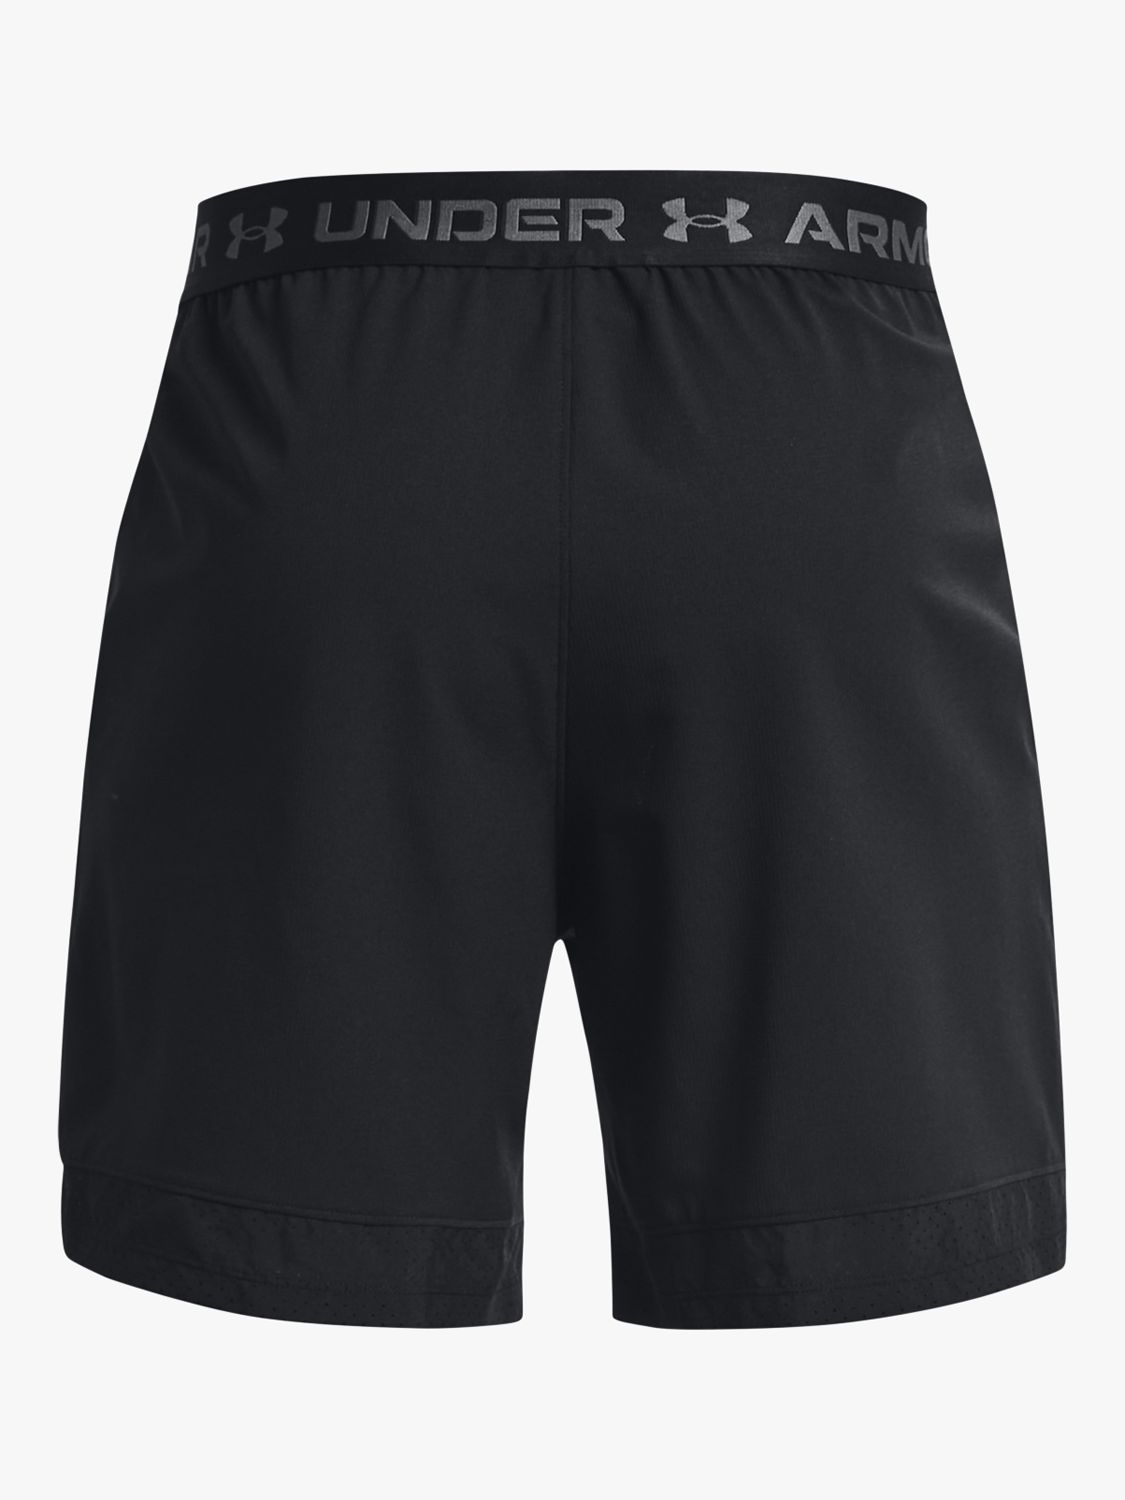 Buy Under Armour Vanish Gym Shorts Online at johnlewis.com